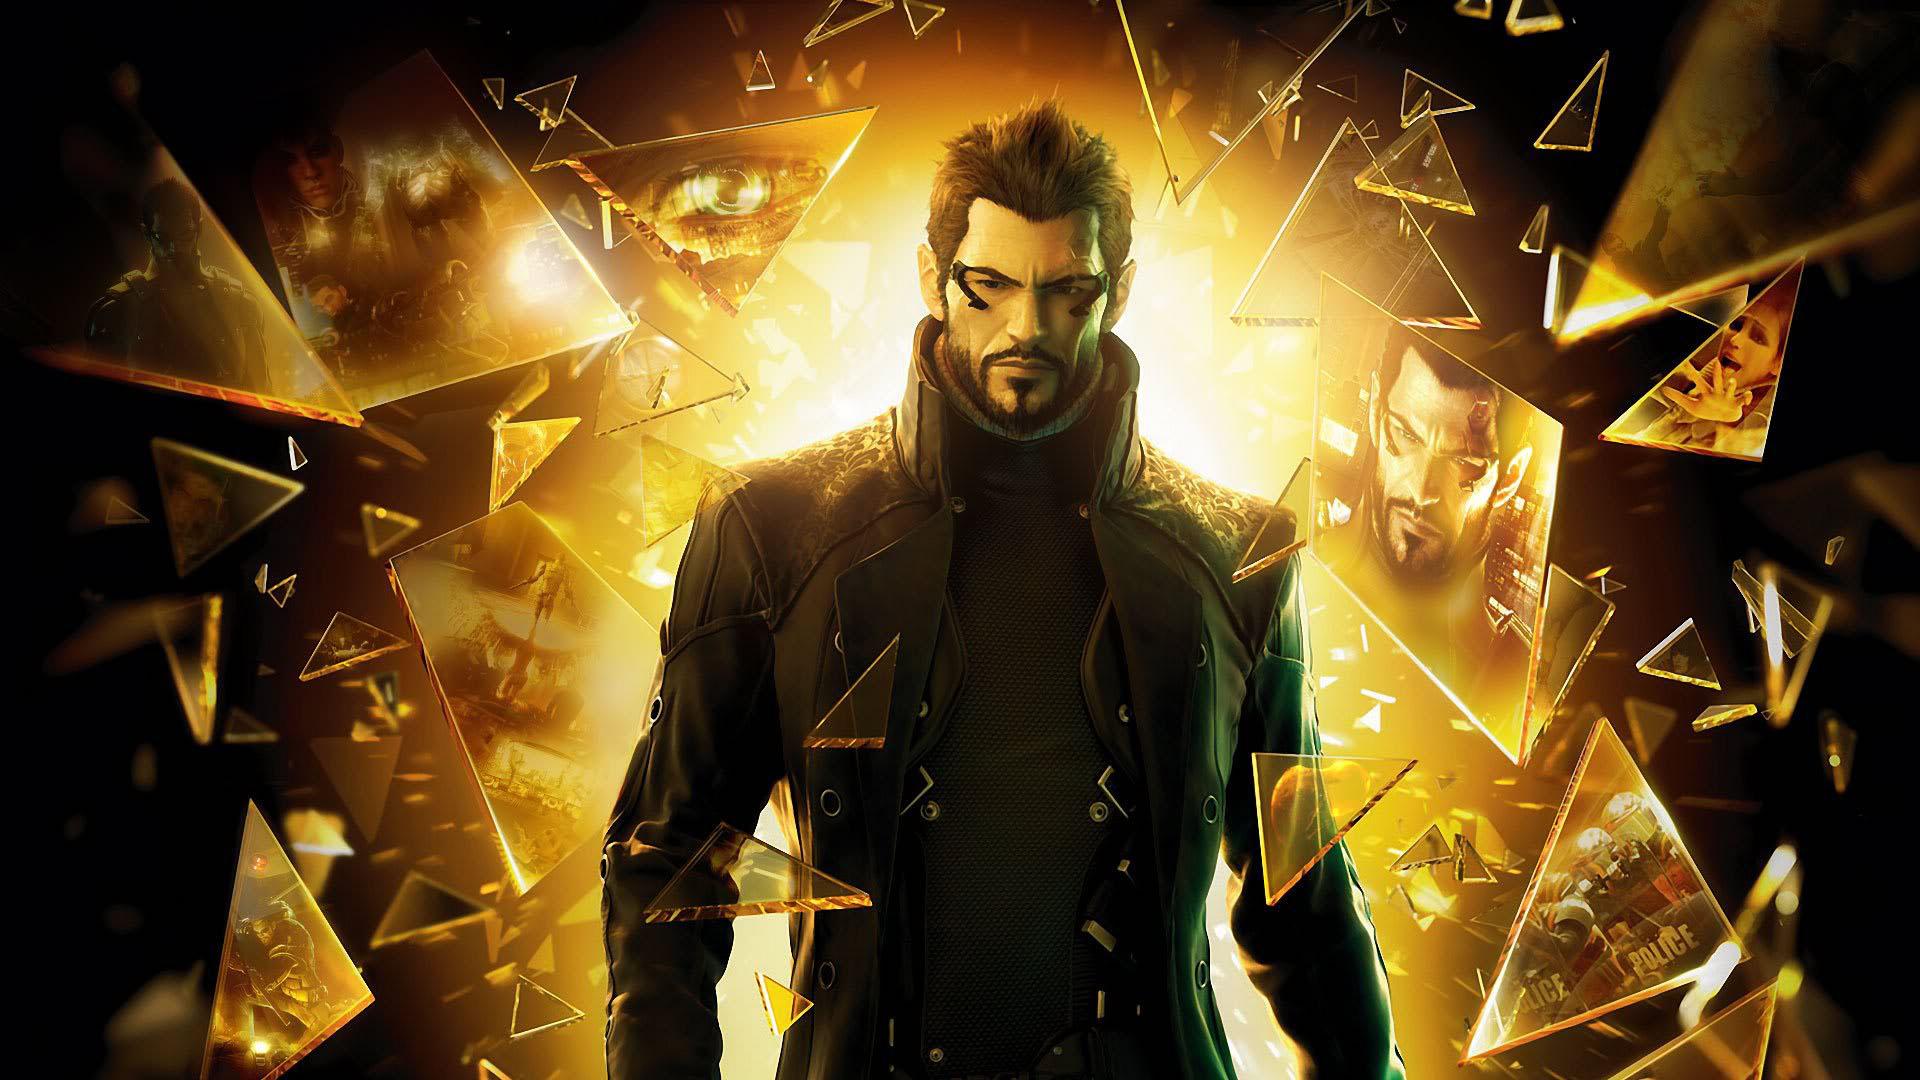    Action Rpg Games Wallpaper Image featuring Deus Ex Human Evolution